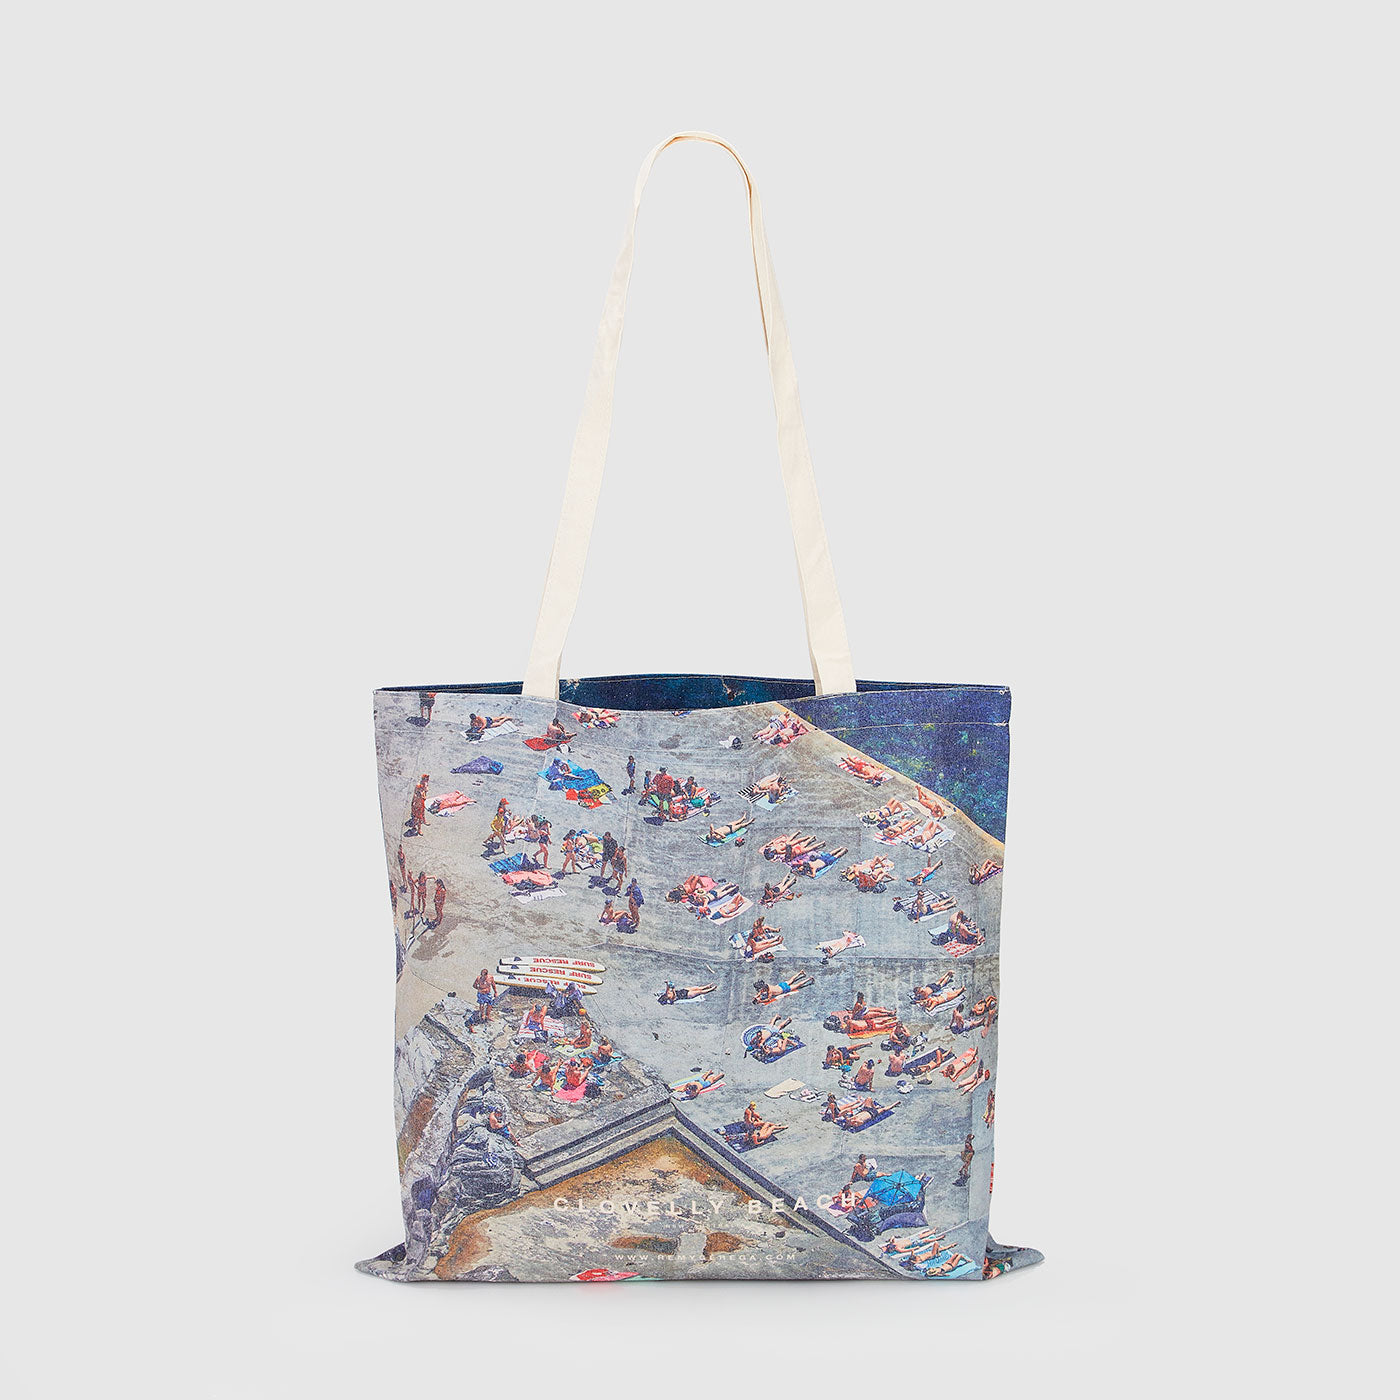 Clovelly Beach Canvas Tote Bag